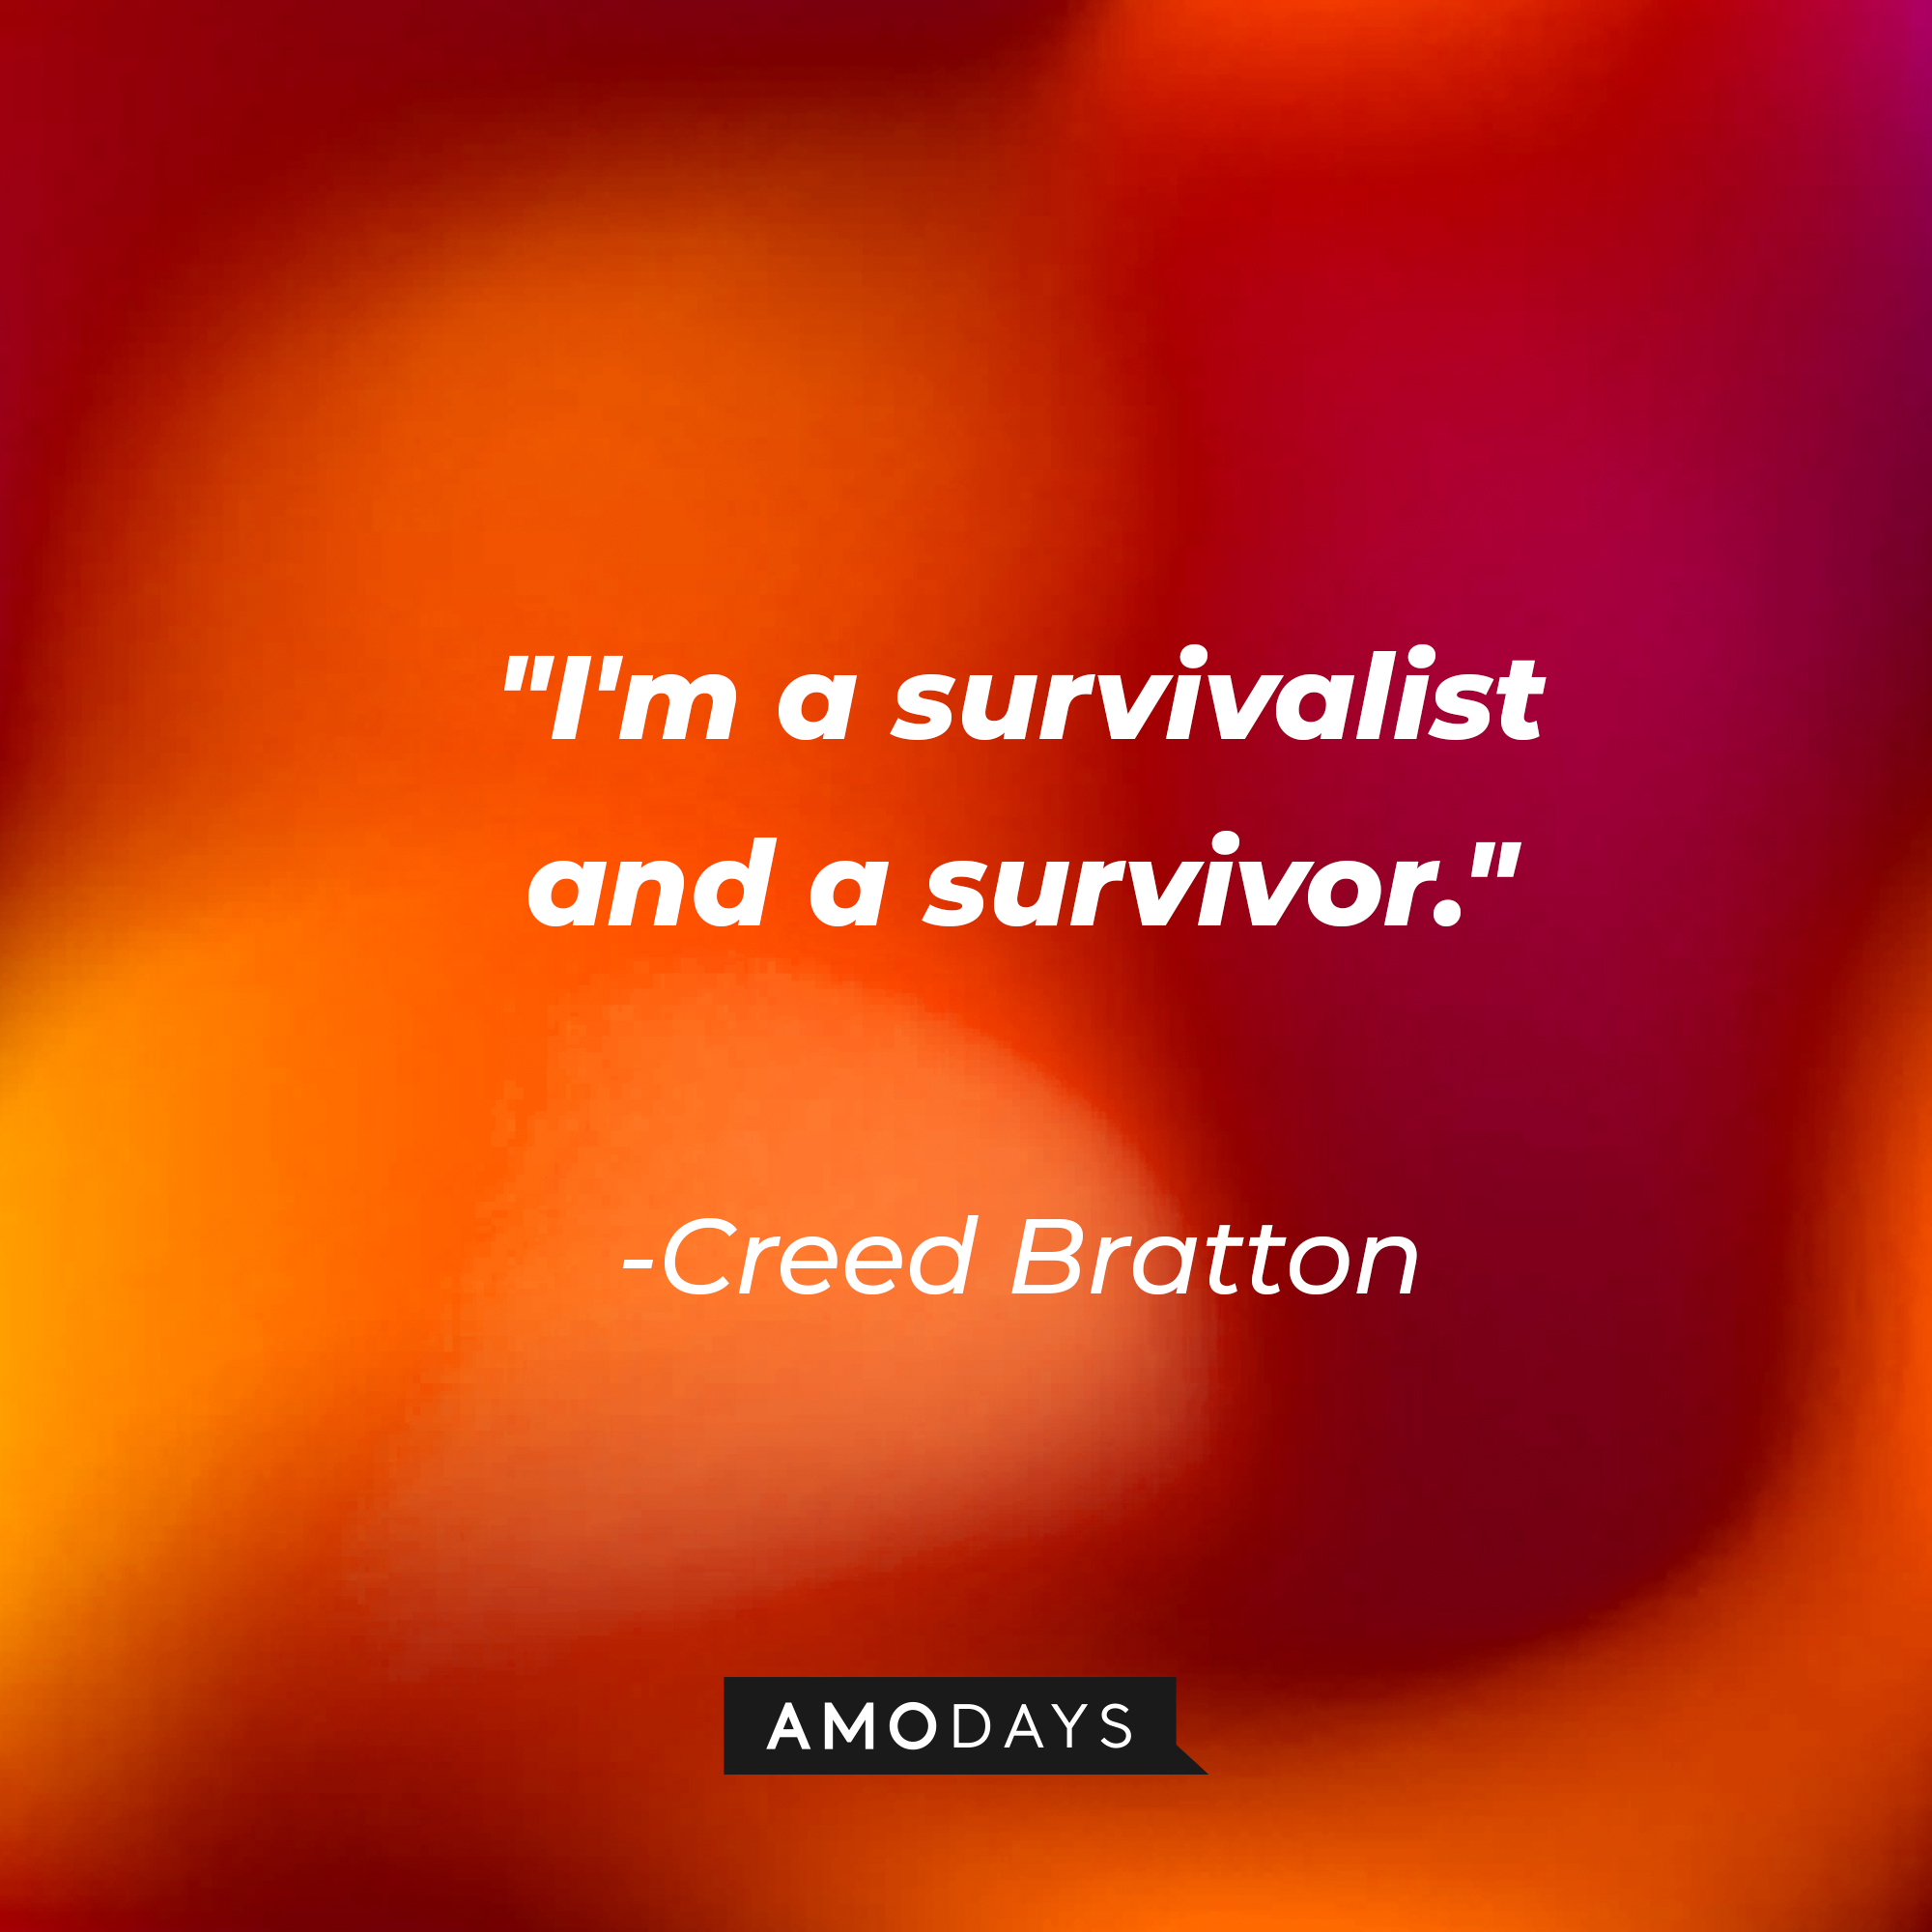 Creed Bratton's quote: "I'm a survivalist and a survivor." | Source: AmoDays